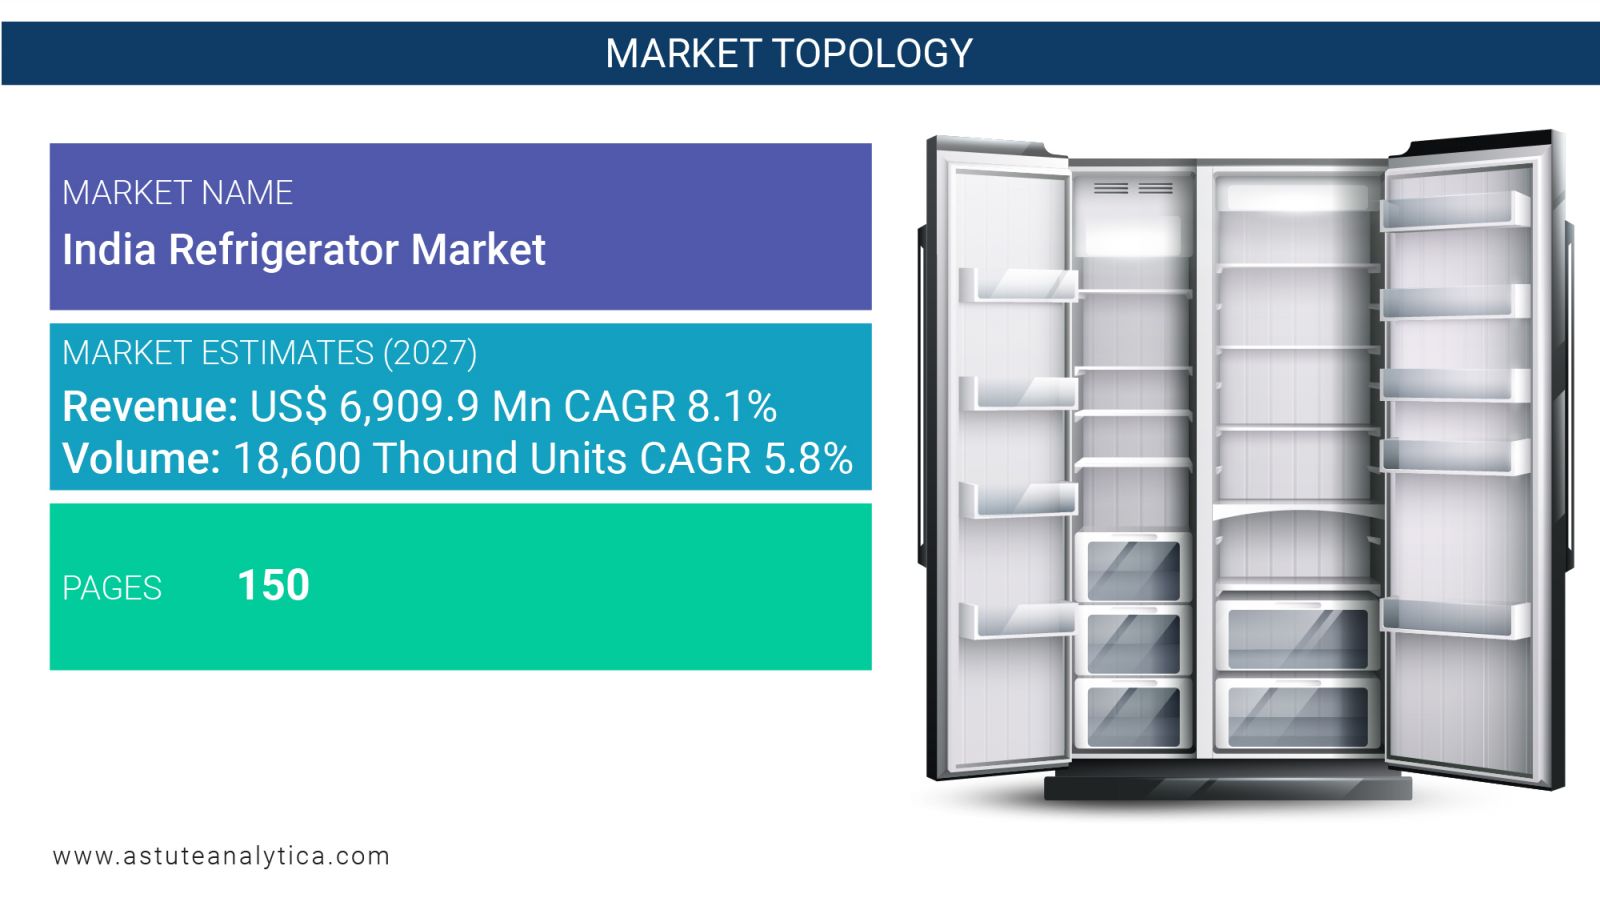 India Refrigerator Market topology